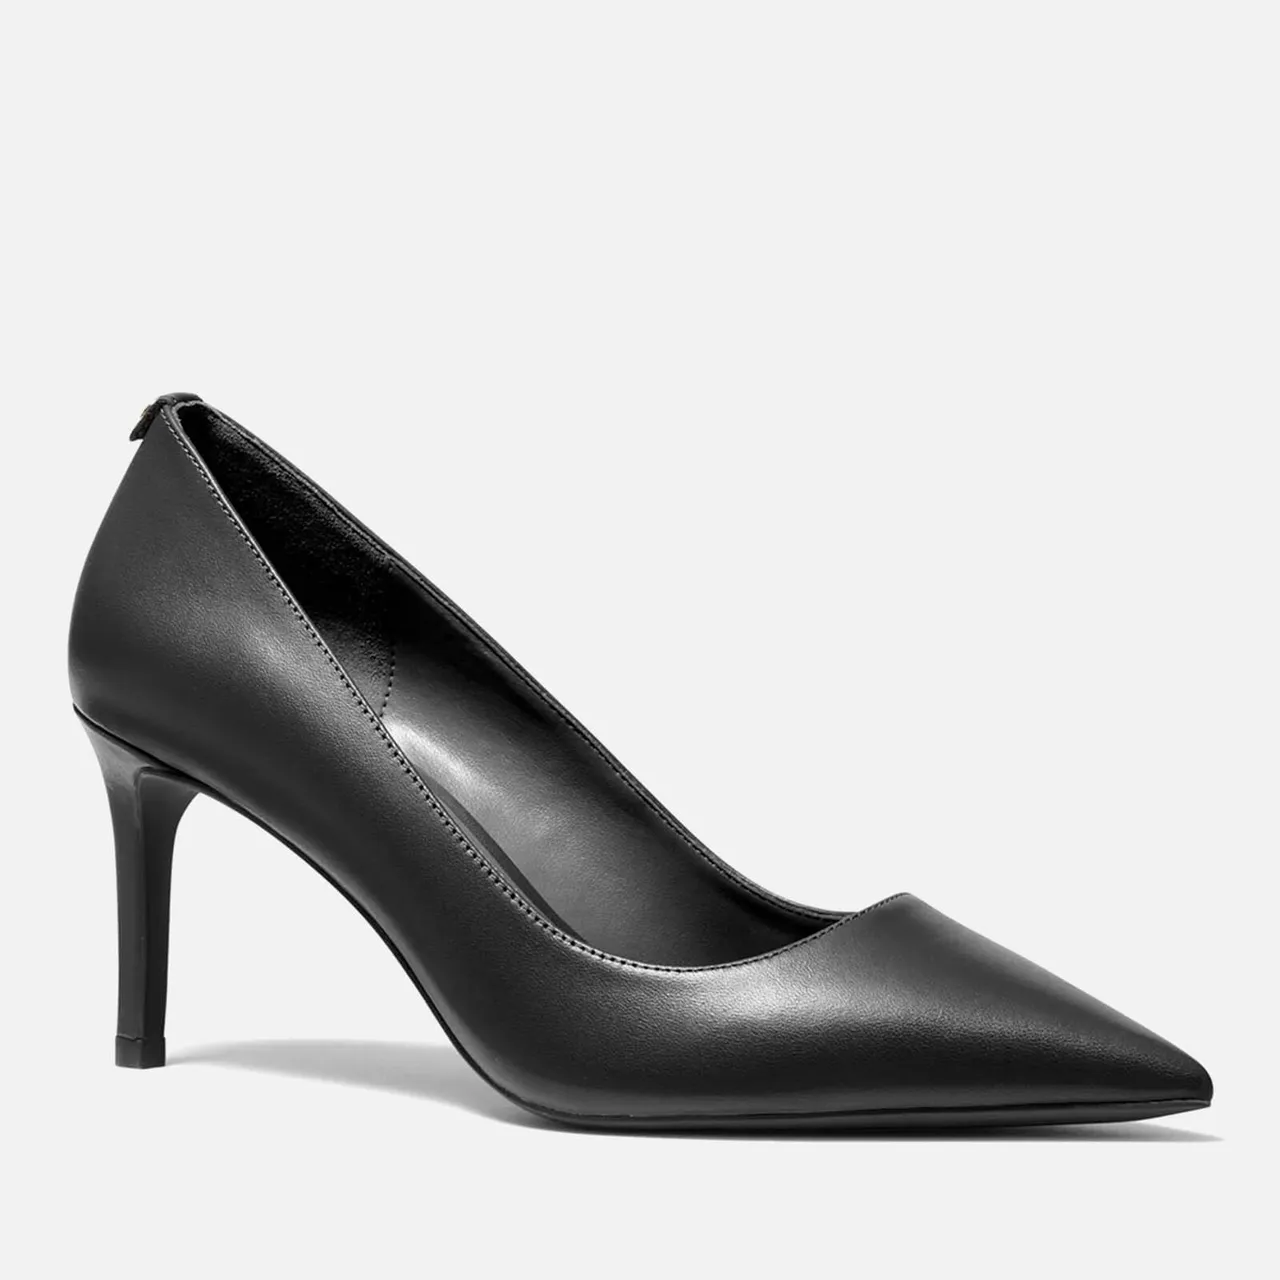 MICHAEL Michael Kors Women's Alina Leather Court Shoes